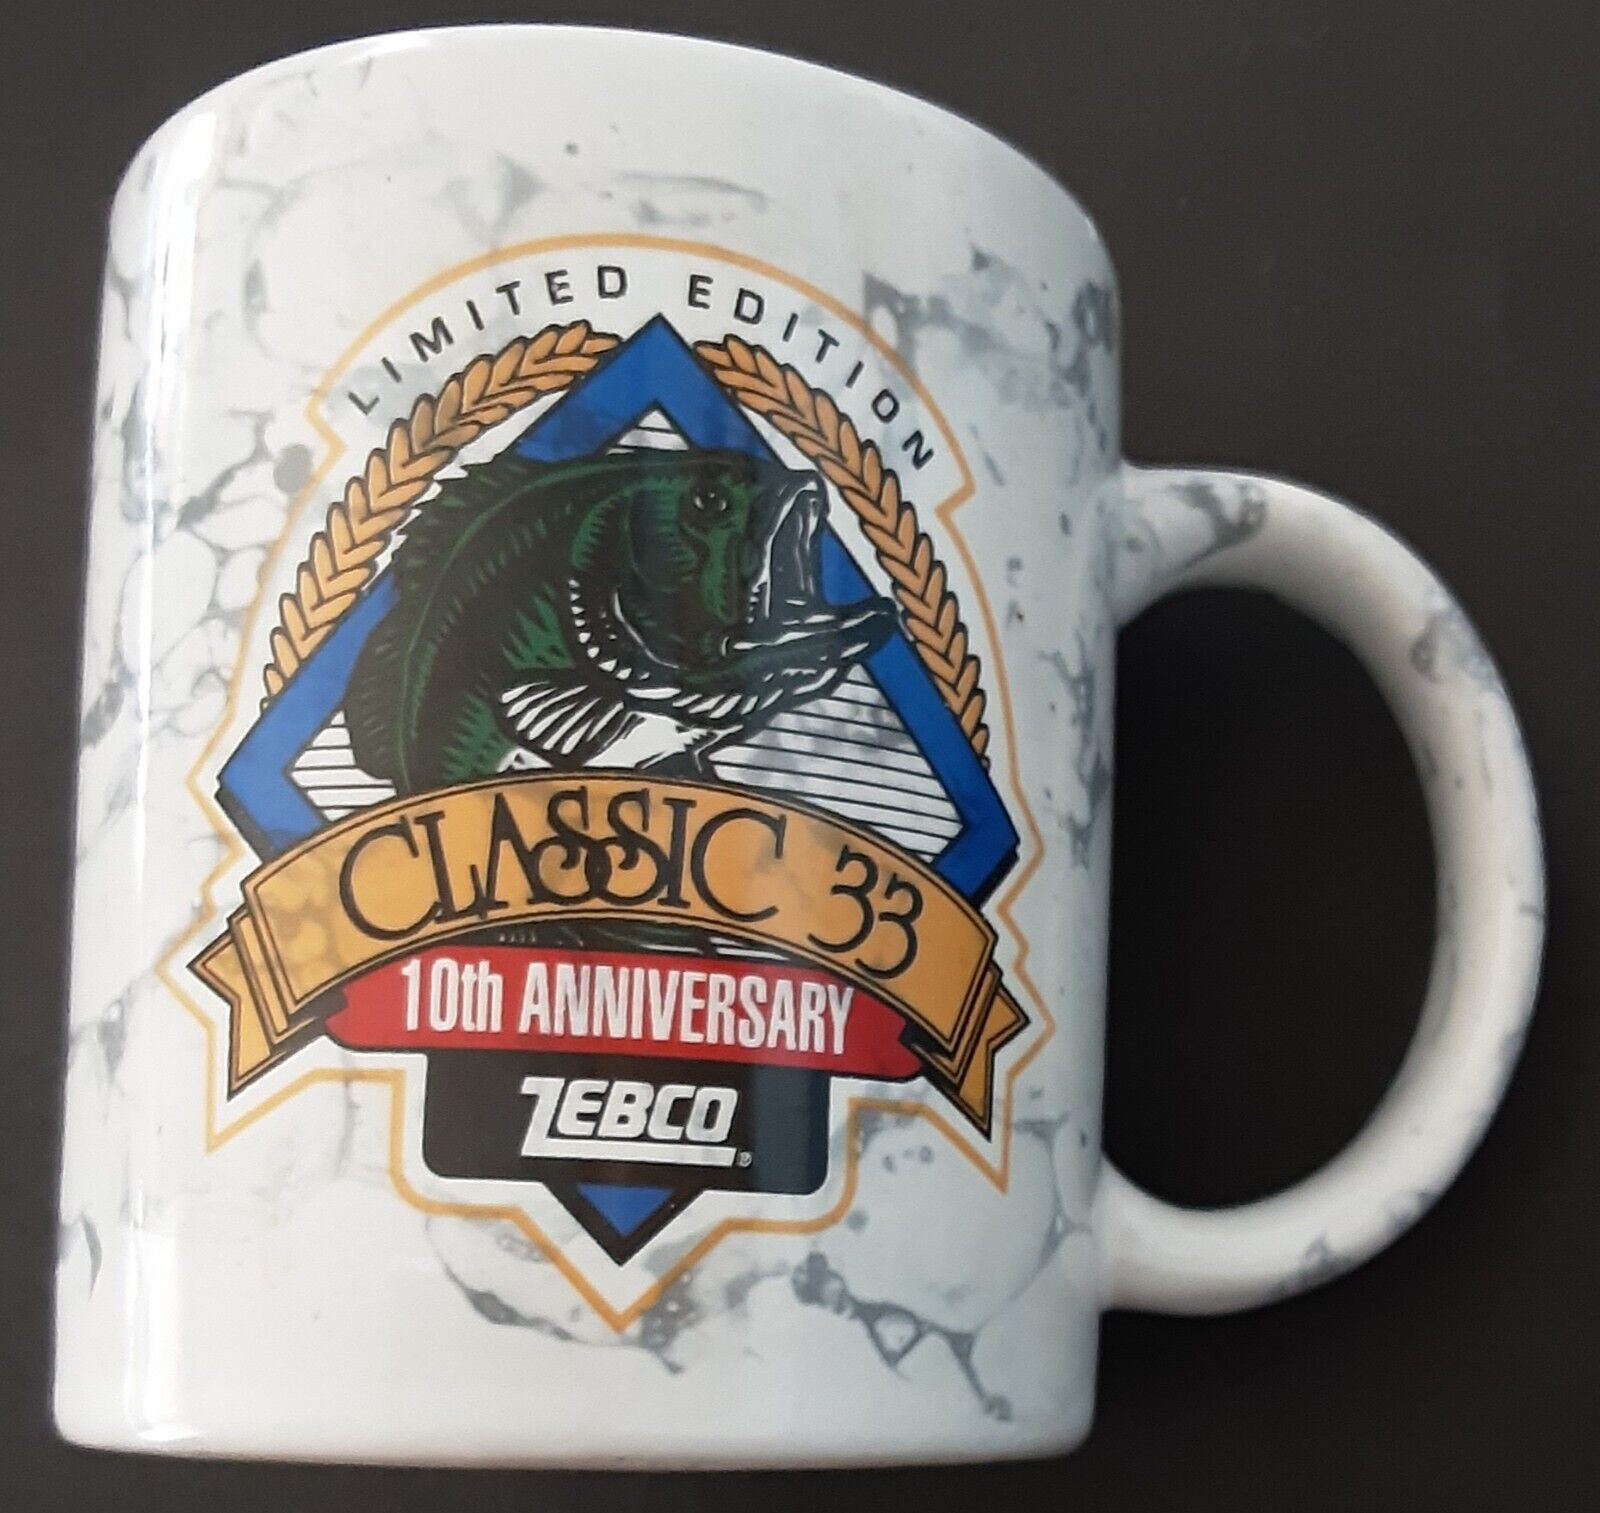 Zebco Classic 33 - 10th Anniversary 16 Oz Coffee Mug Limited Edition